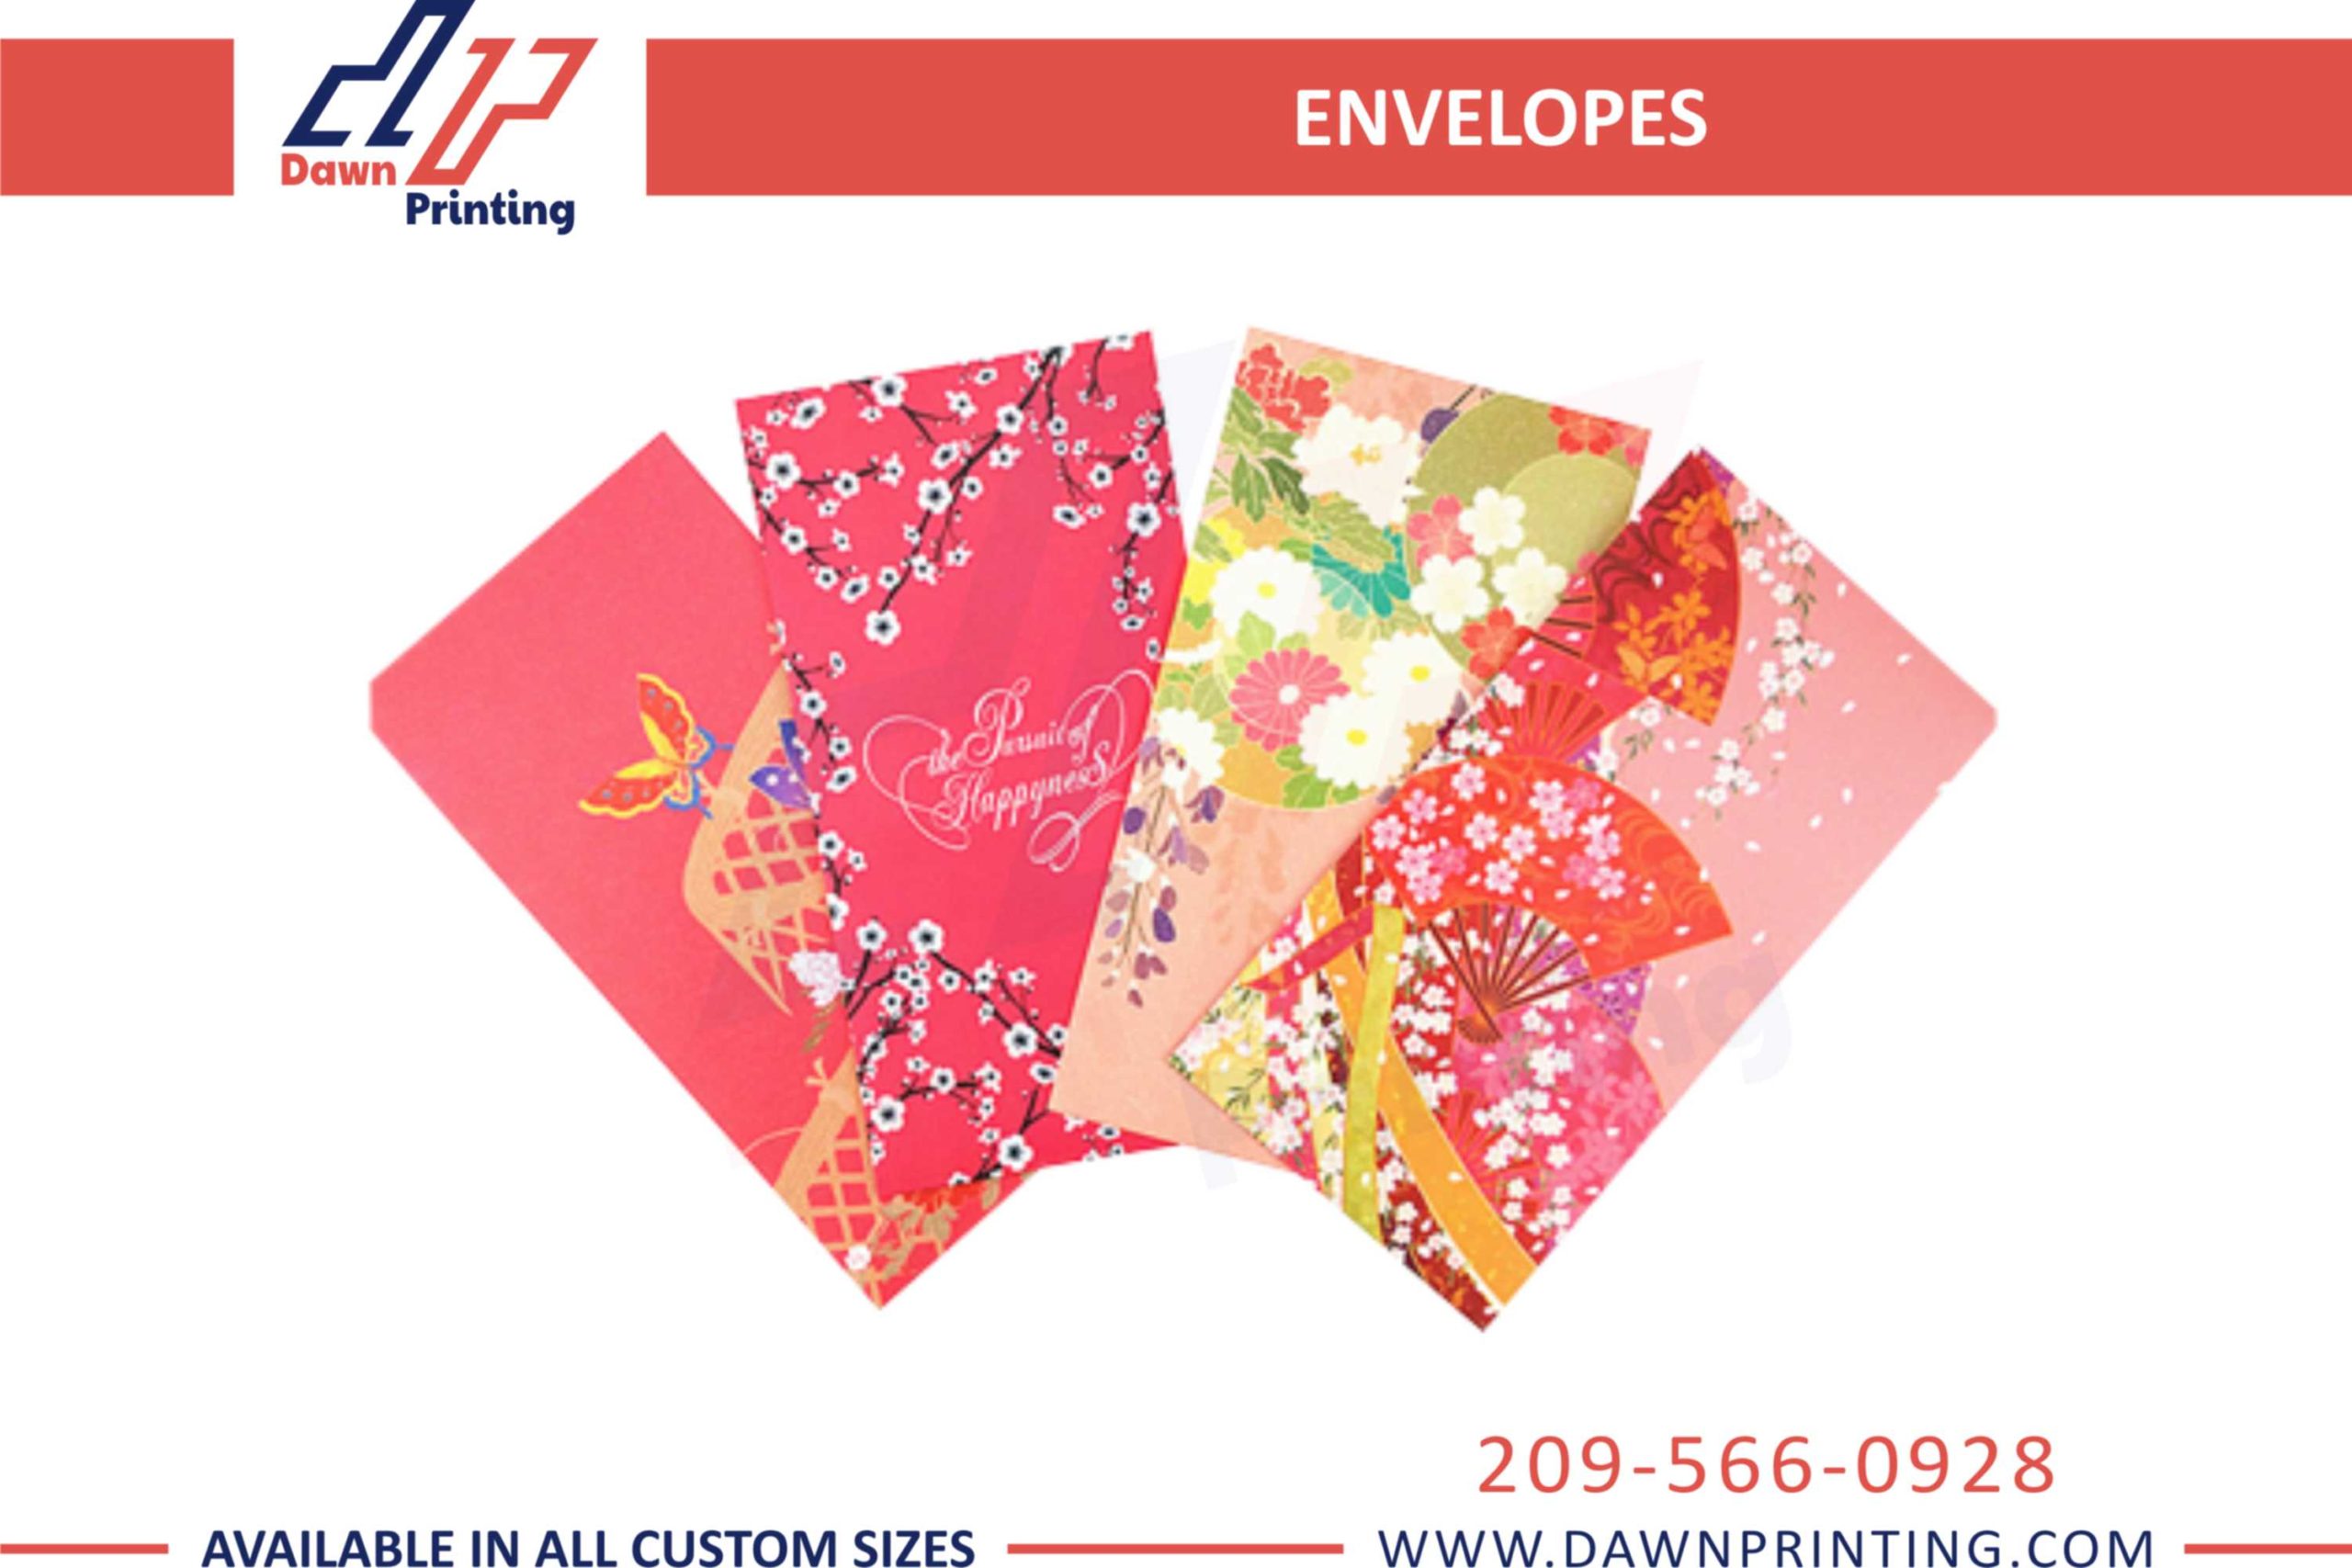 Wholesale Envelopes in USA - Dawn Printing